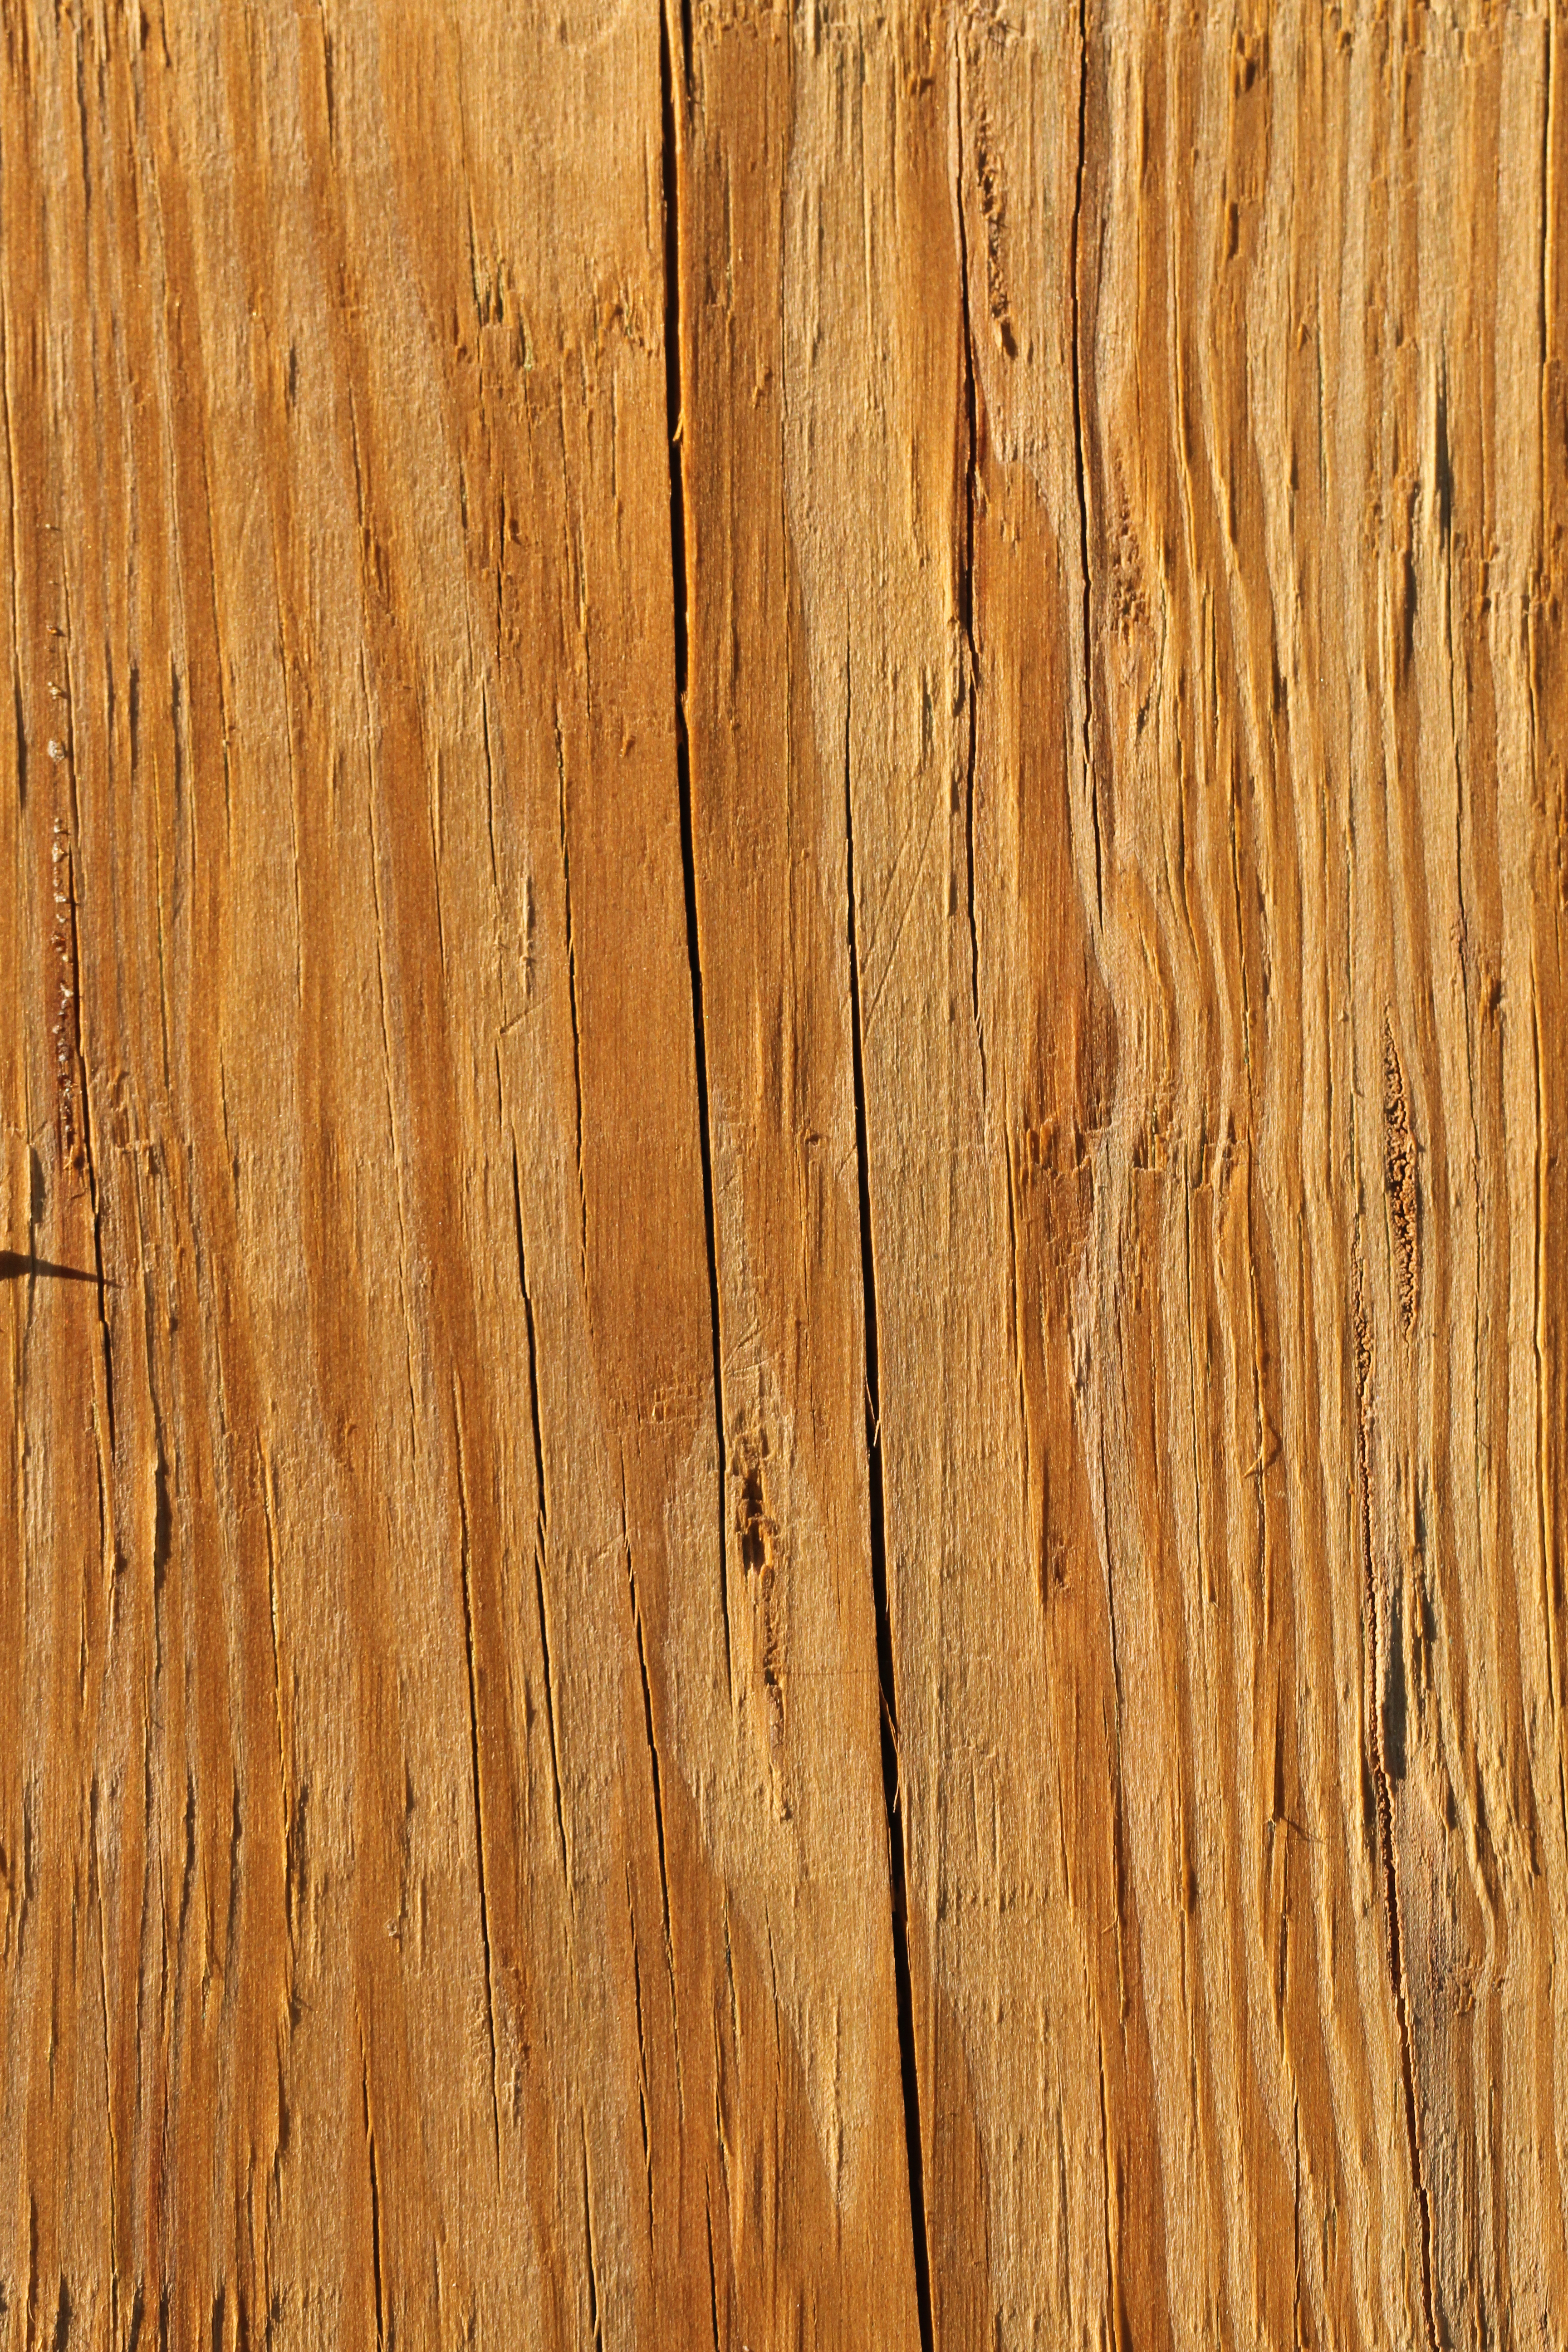 Wooden Board Texture, Board, Brown, Freetexturefrida, Surface, HQ Photo